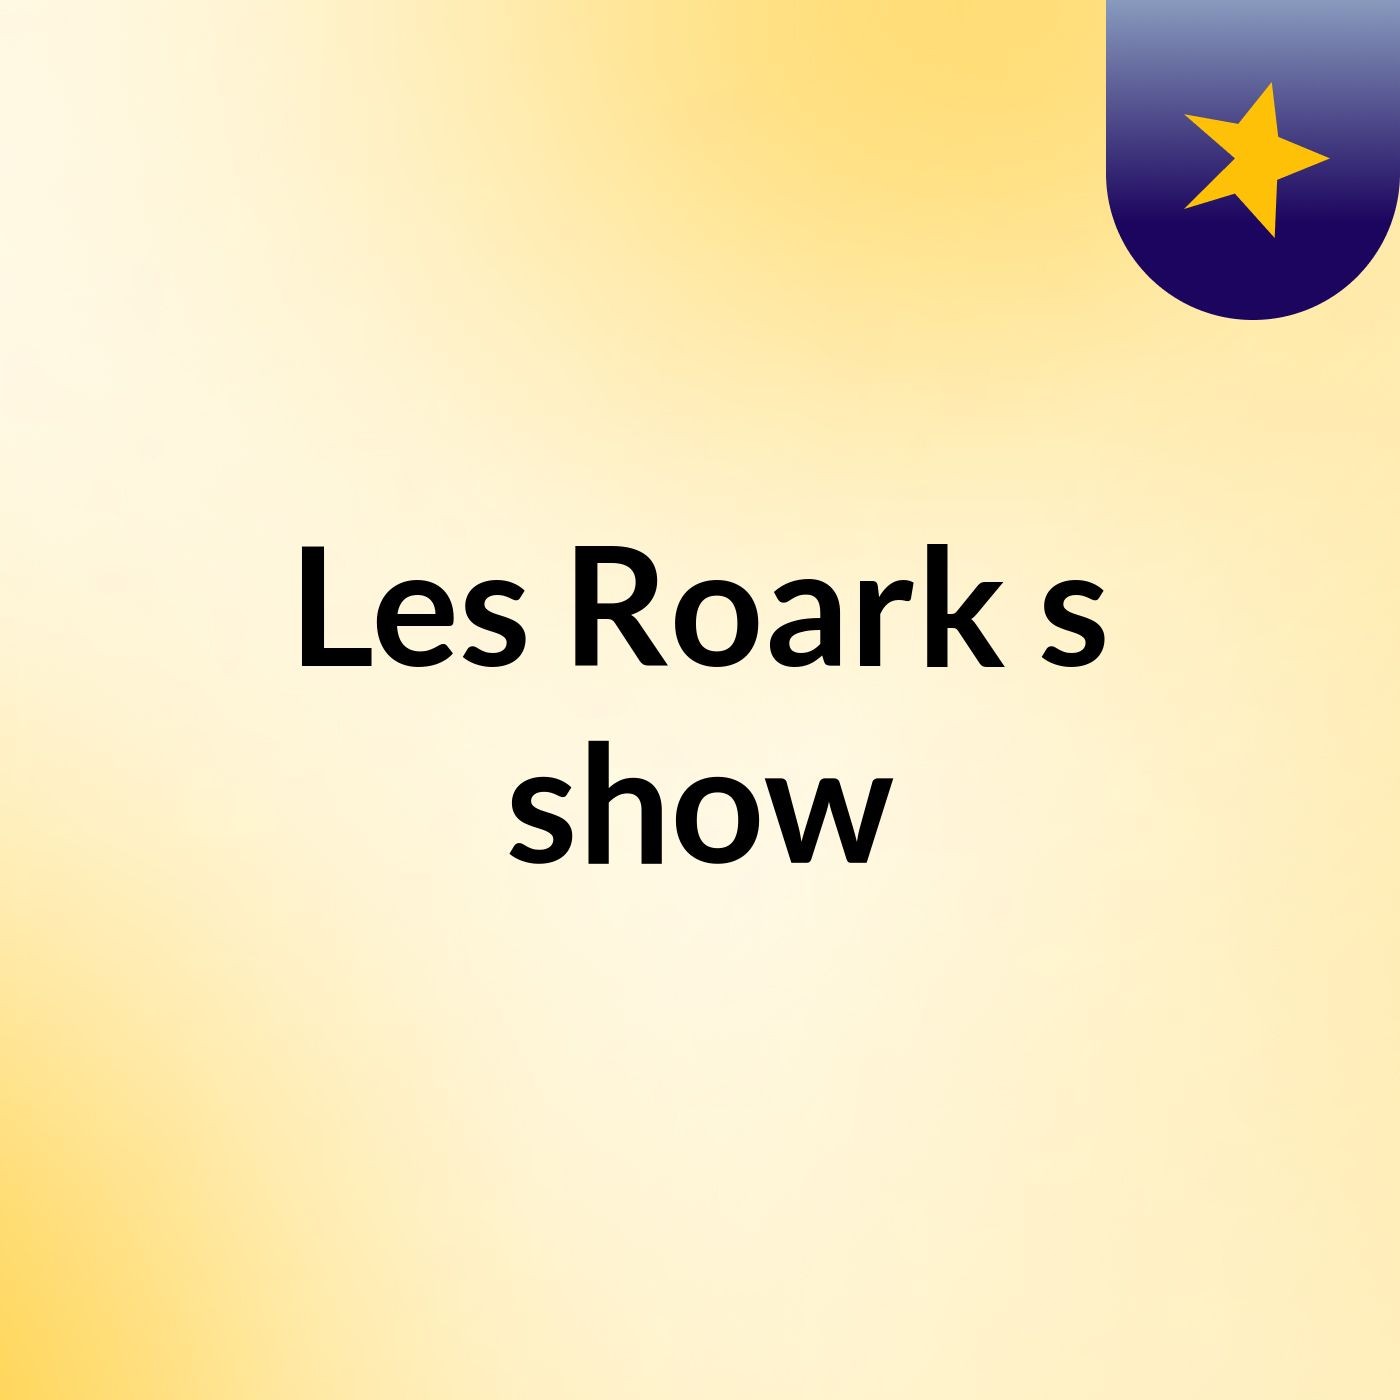 Les Roark's show